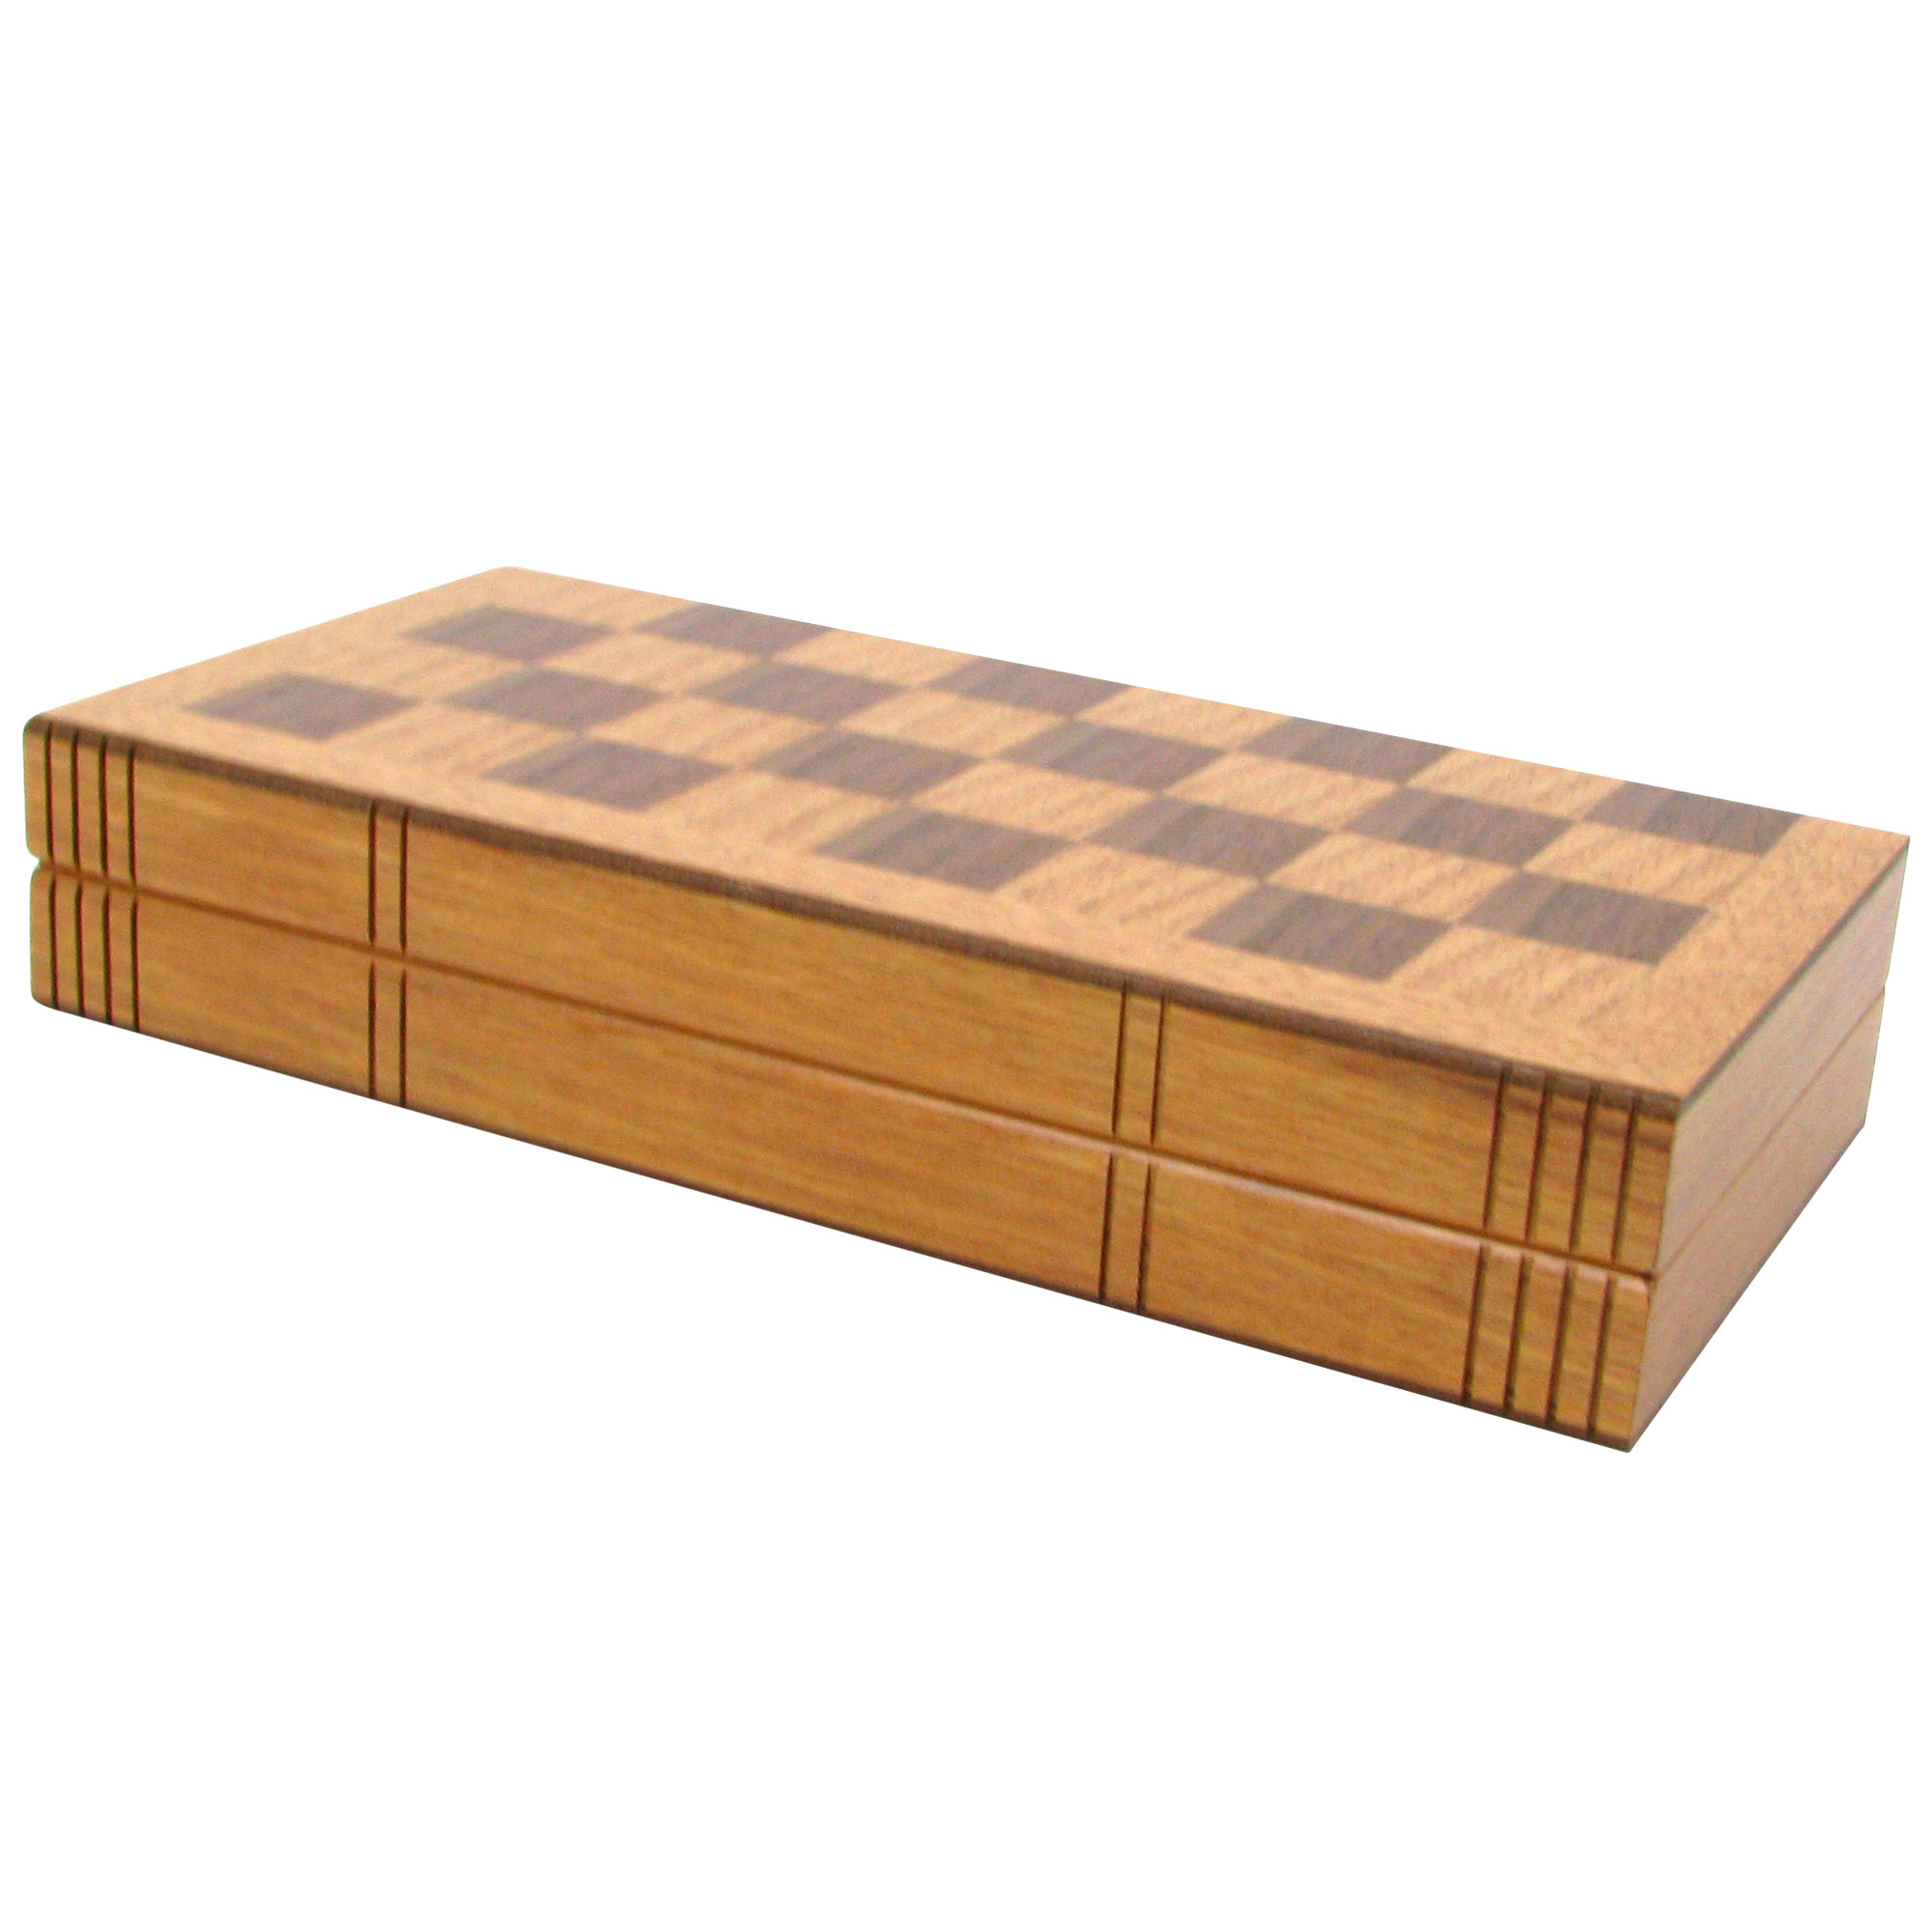 TG Wooden Book Style Chess Board W/ Staunton Chessmen